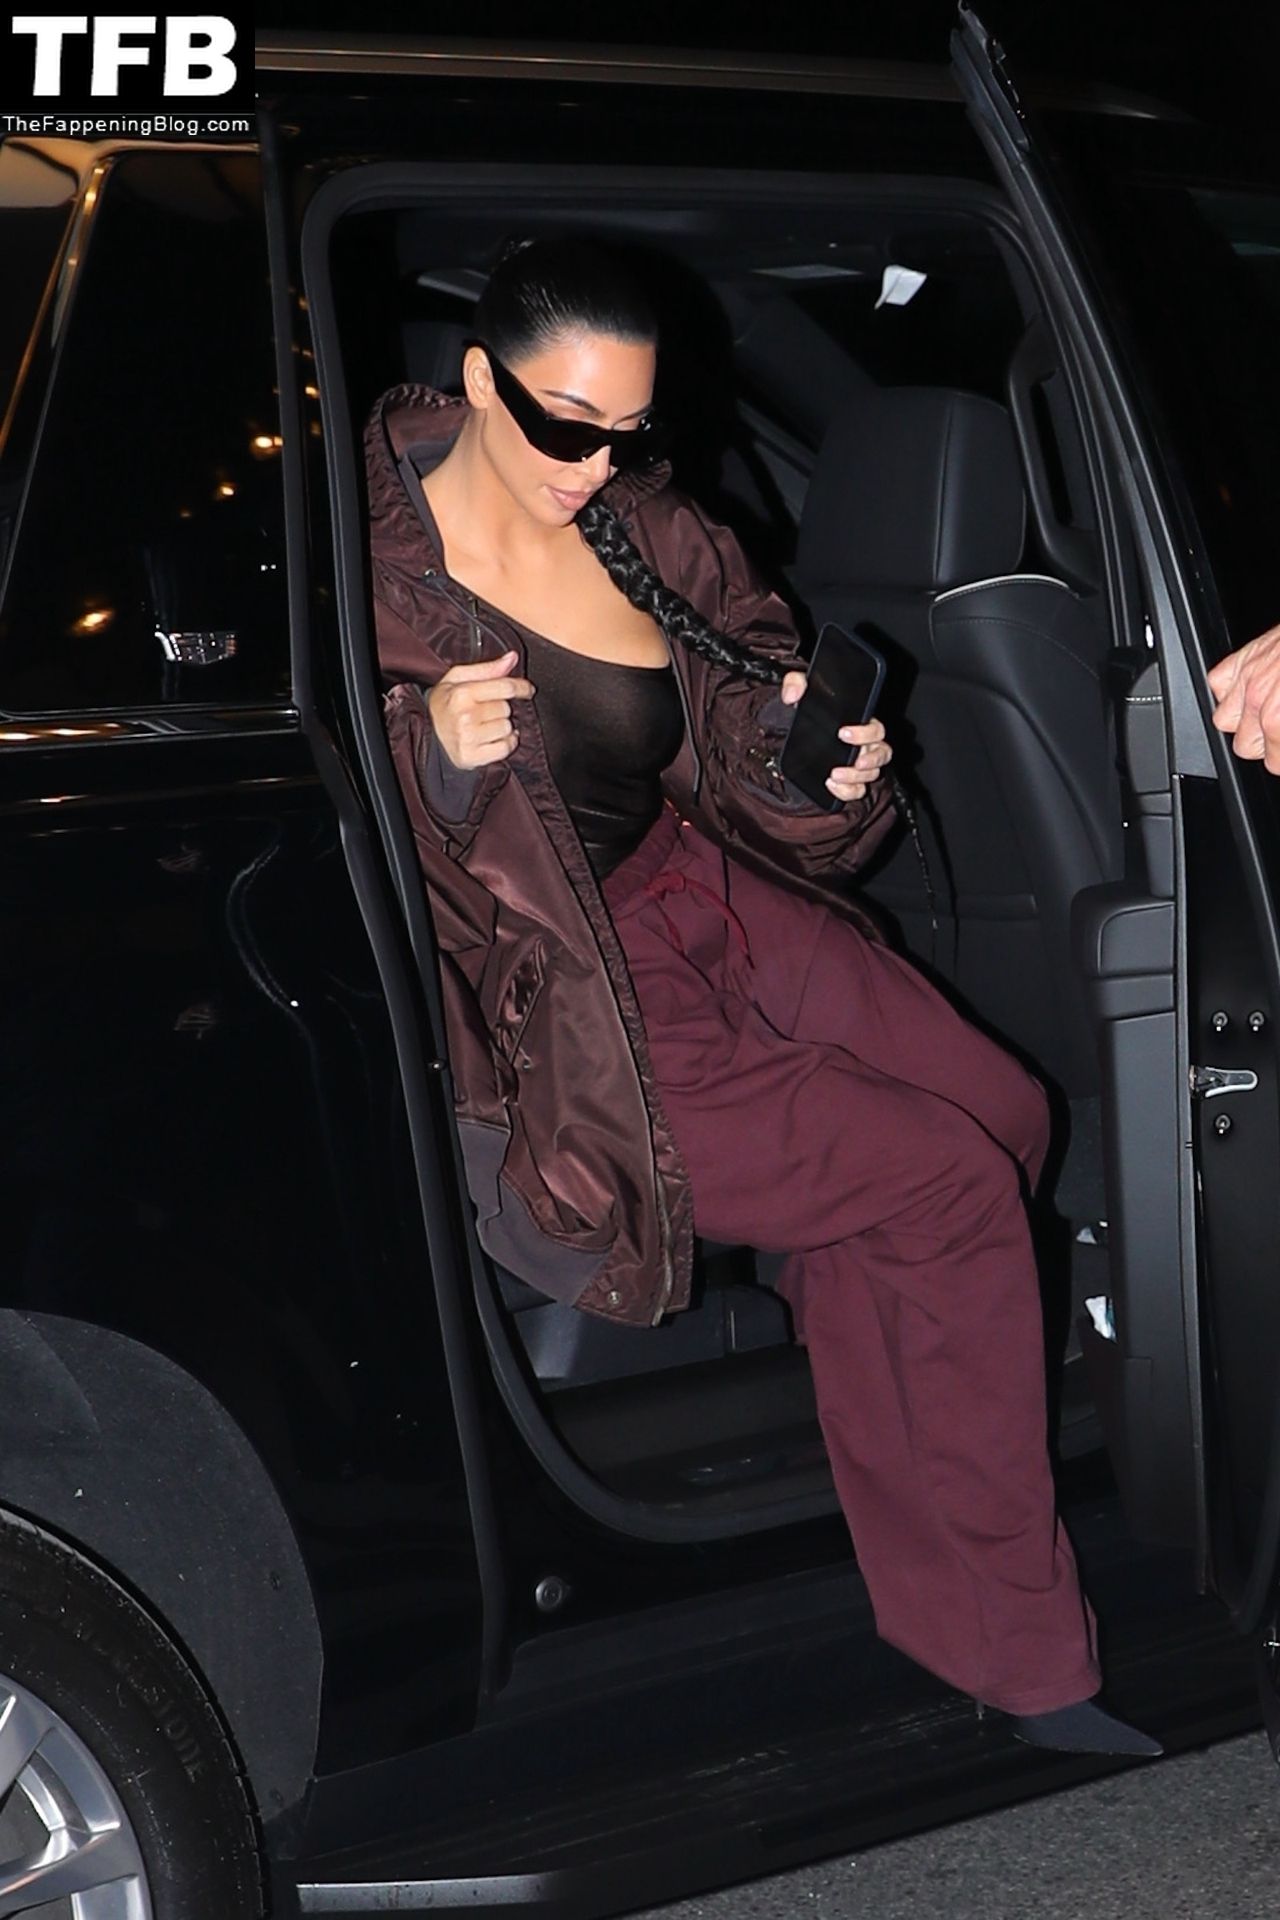 Kim-Kardashian-Sexy-Tits-The-Fappening-Blog-8.jpg